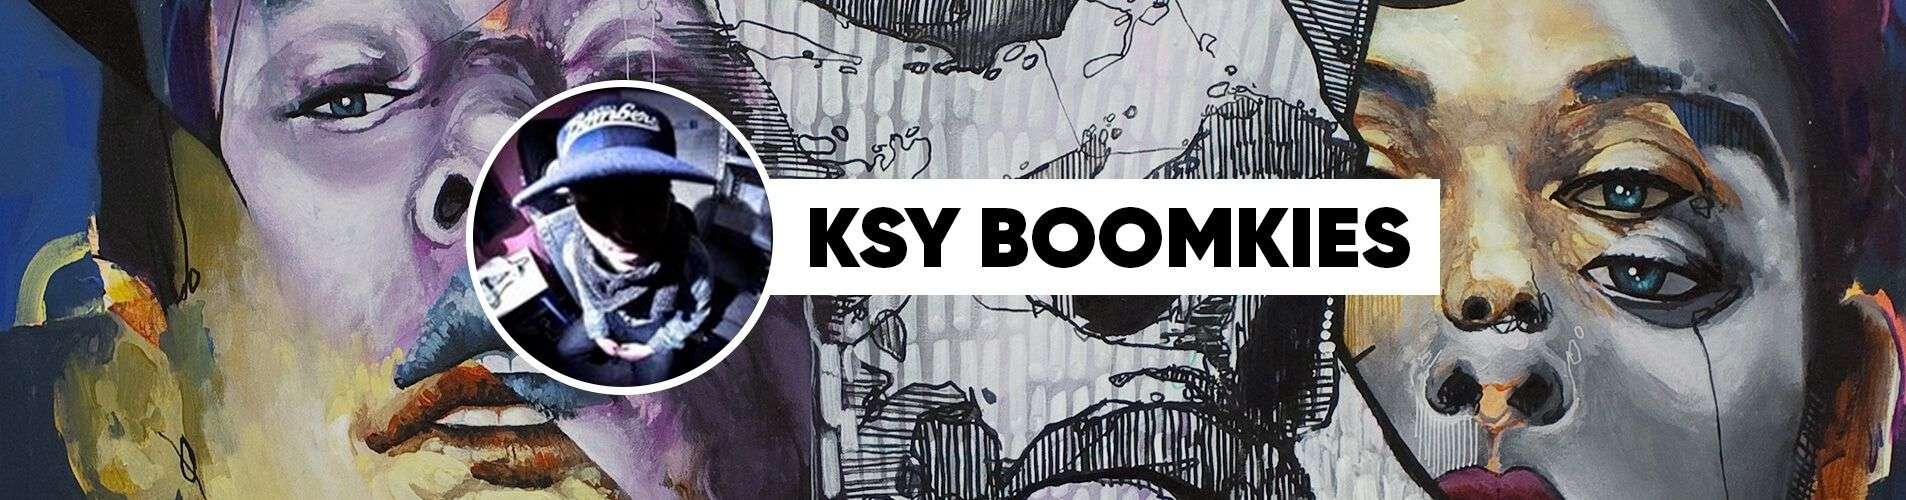  Interview de l'artiste Ksy Boomkies